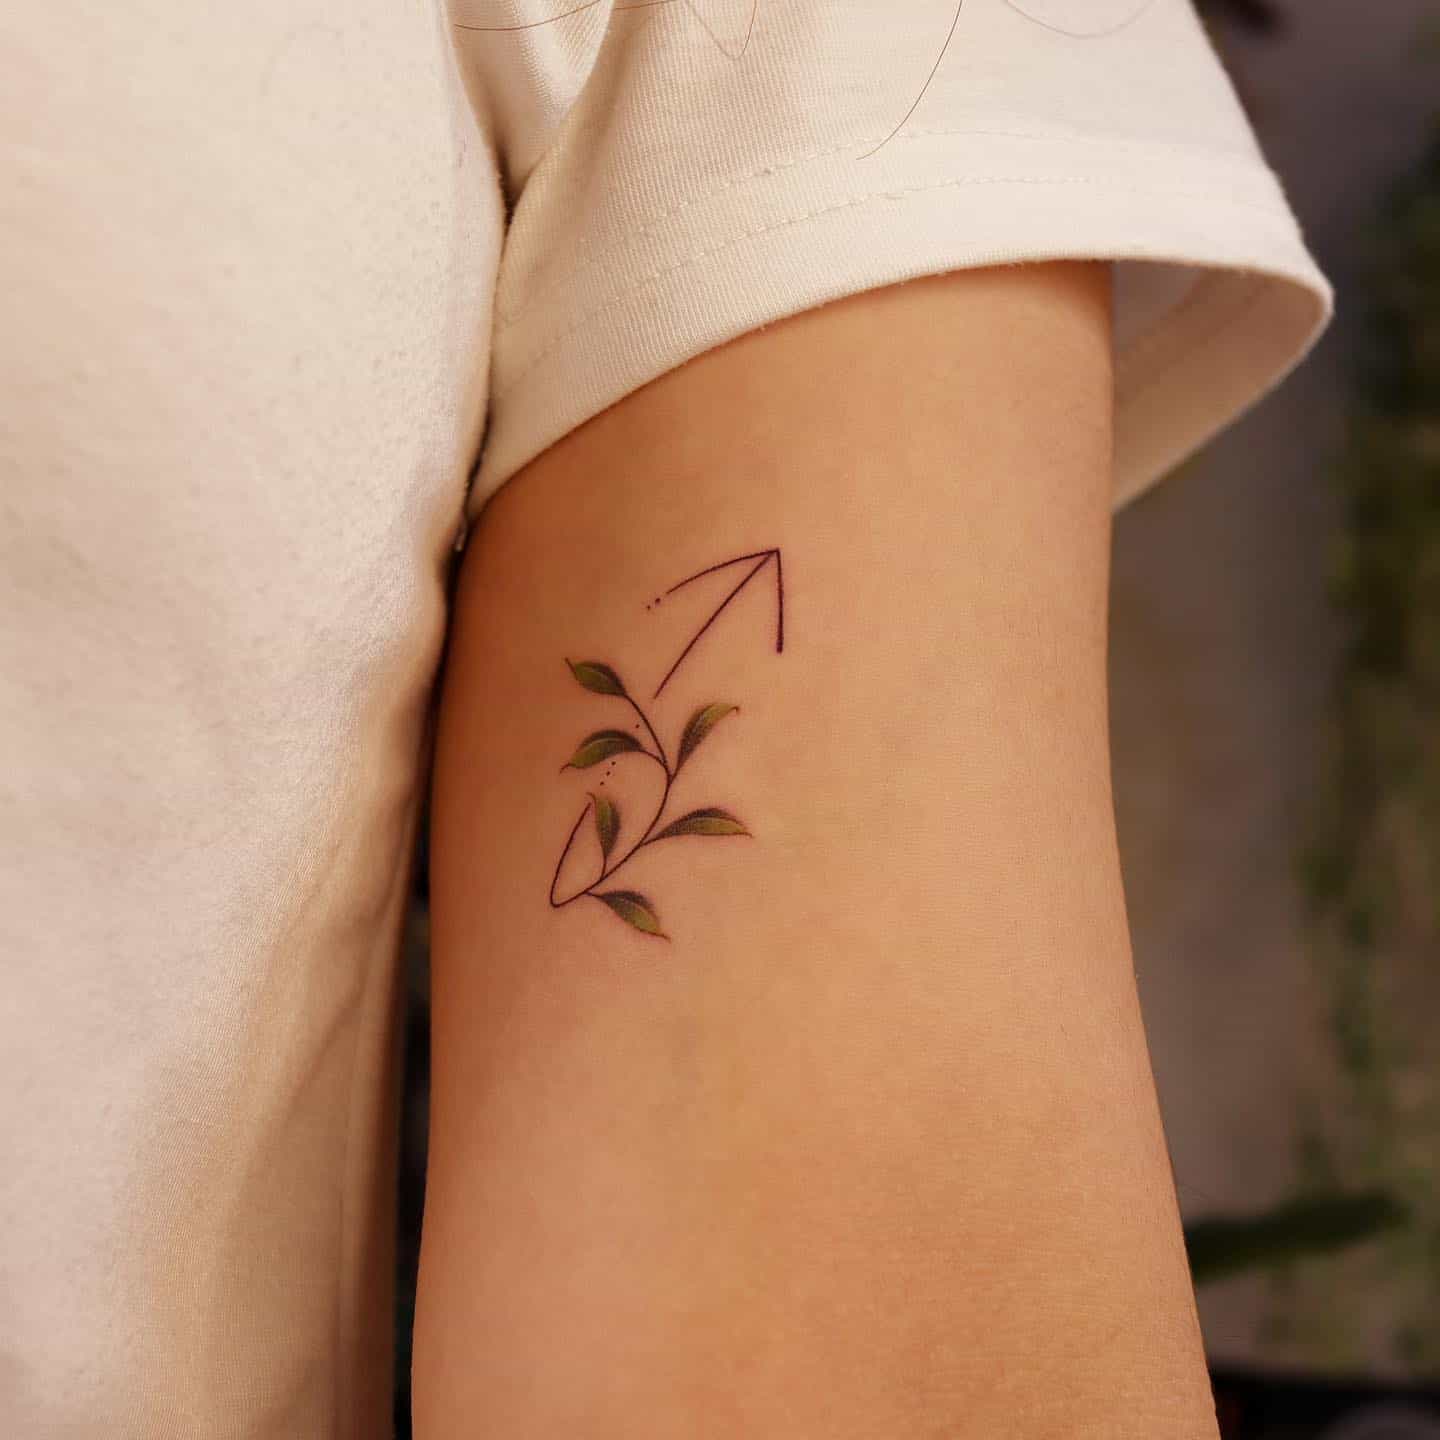 Sagittarious tattoo by noul tattoo